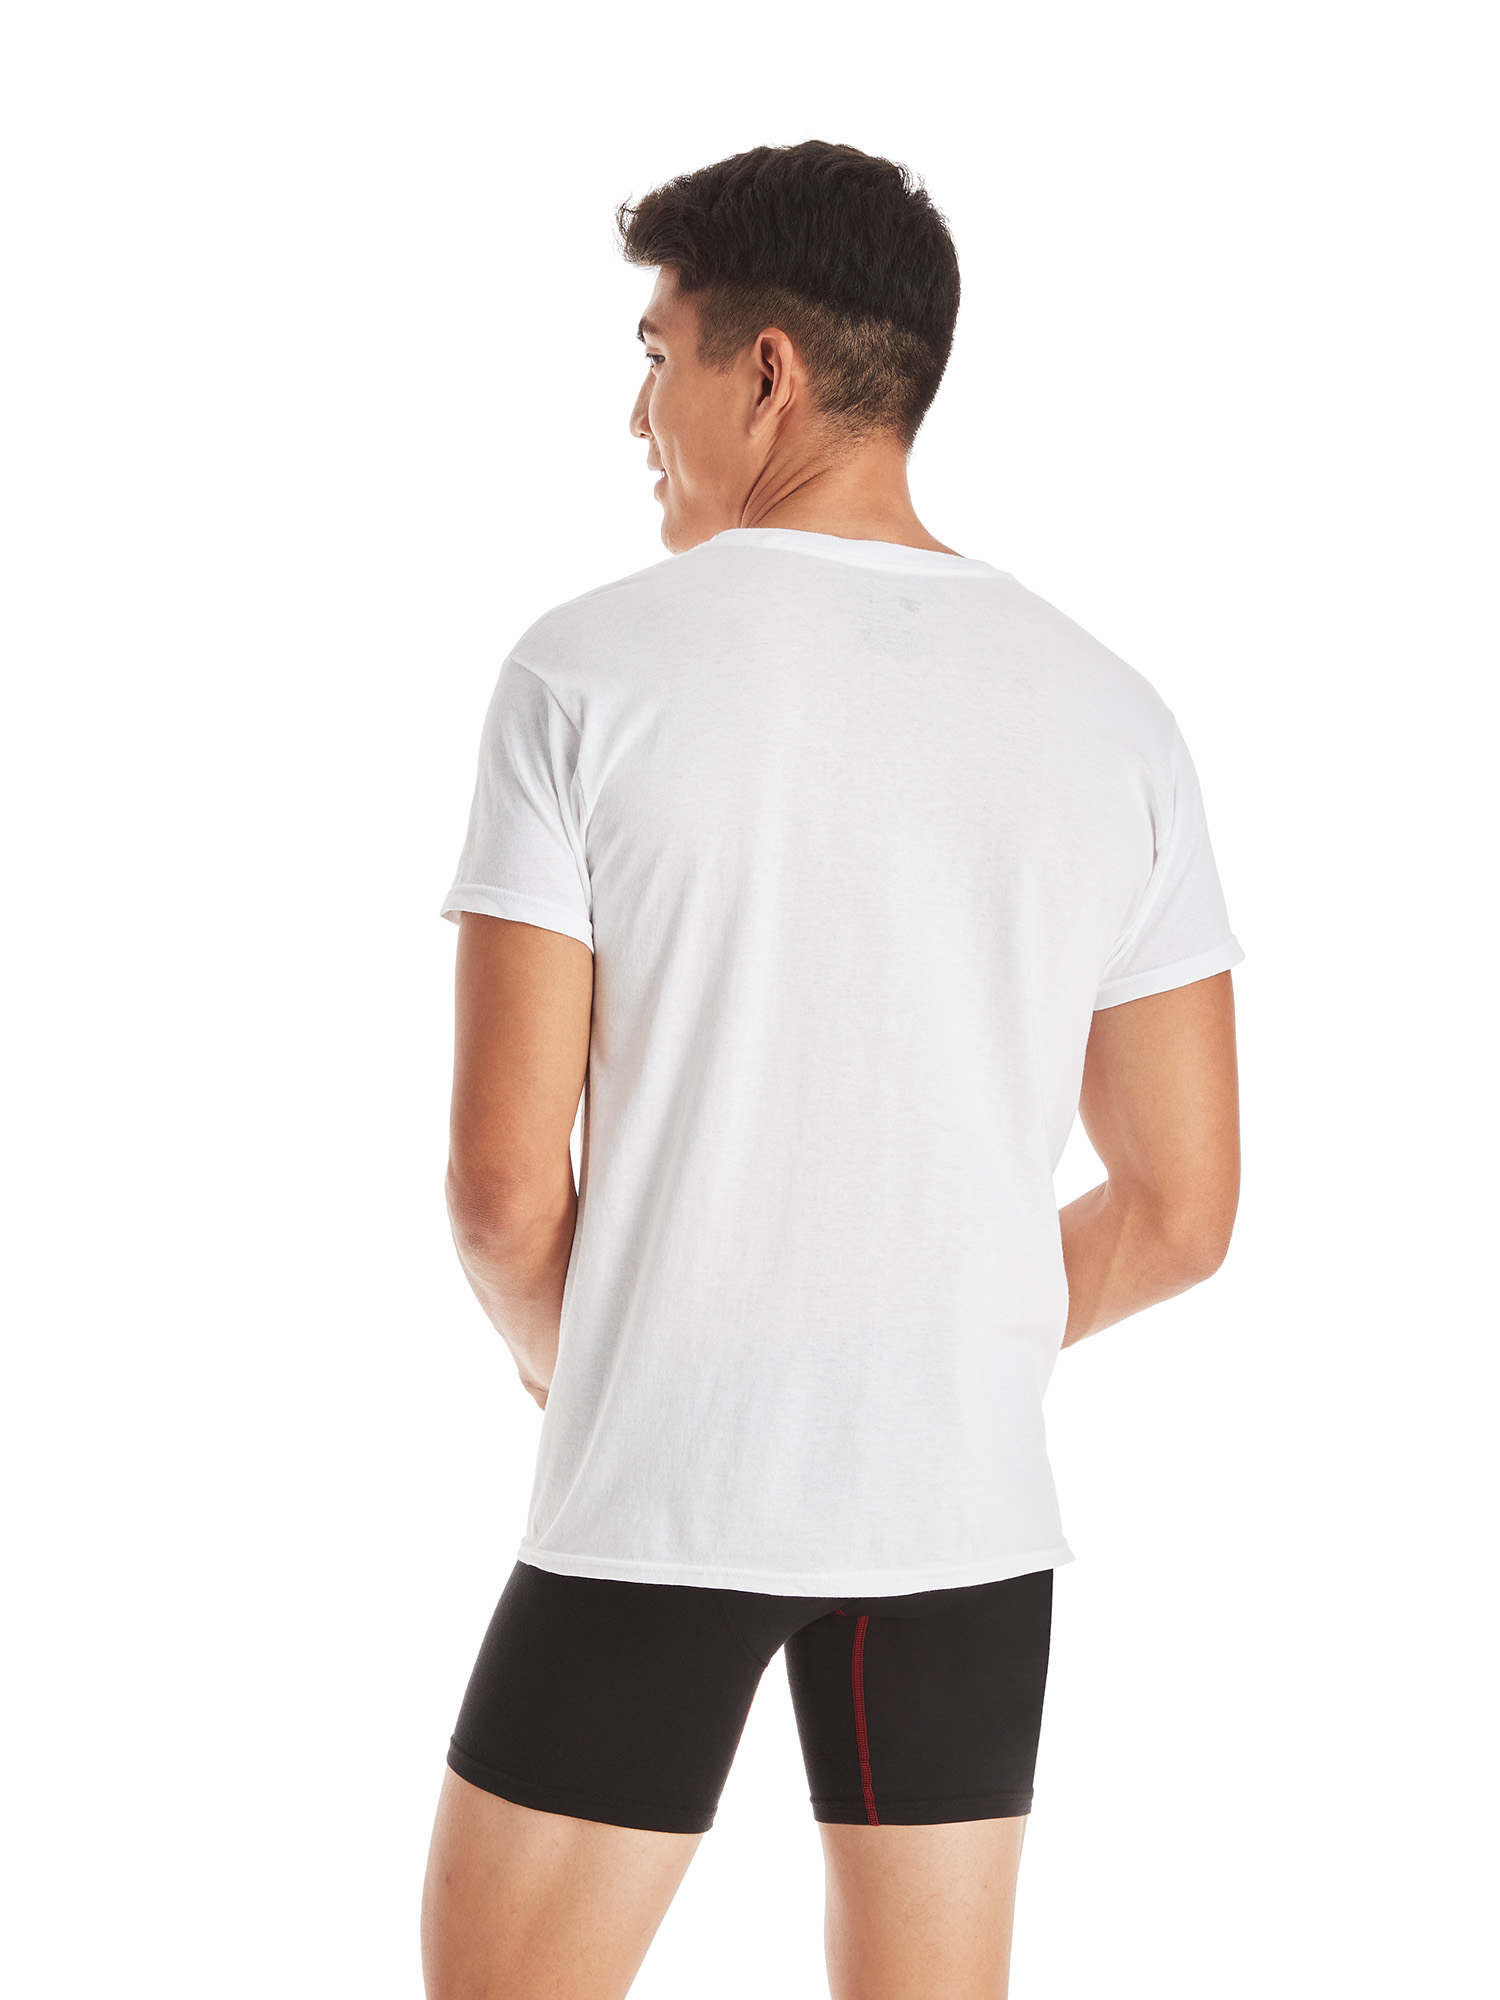 Hanes Men's White Crew T-Shirt Undershirts, 3 Pack - image 4 of 9